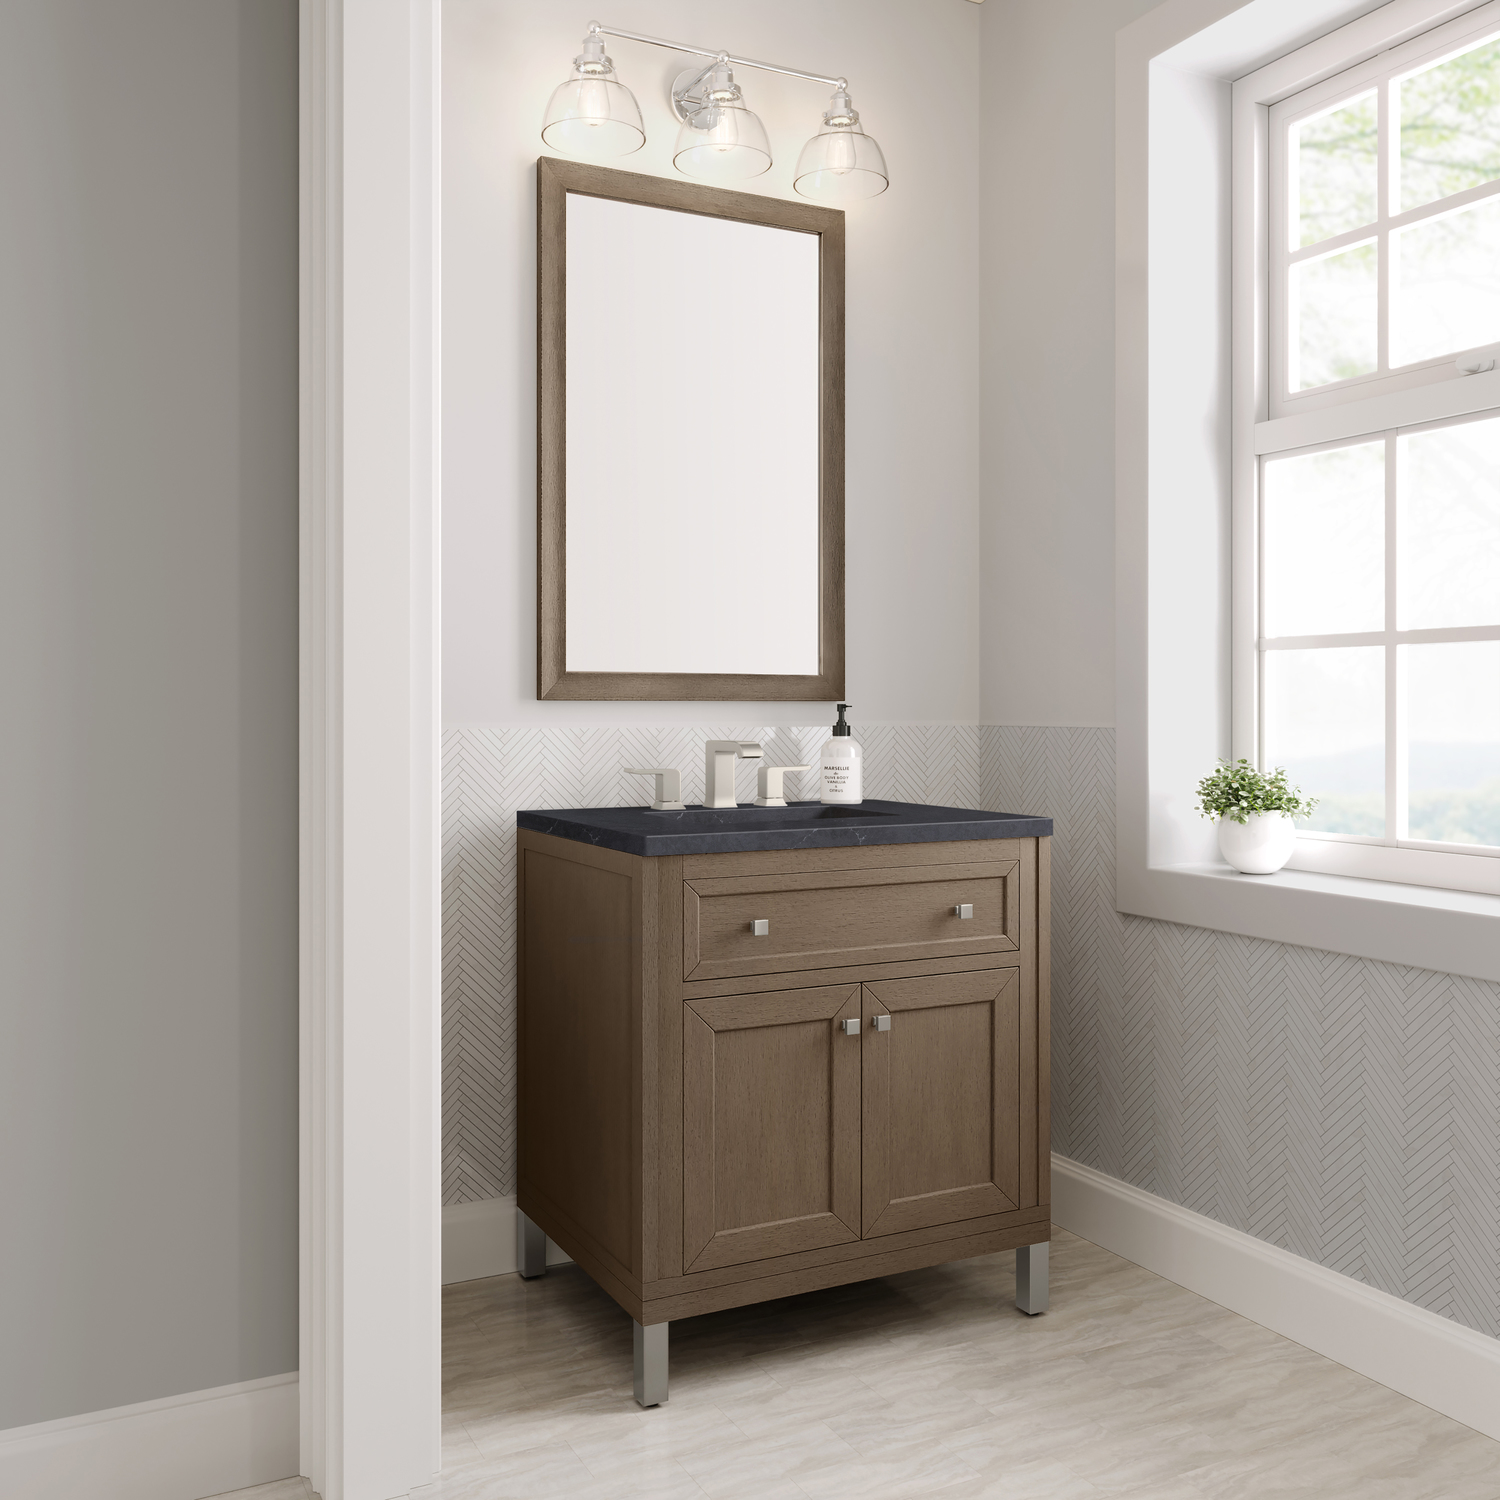 30 inch bathroom vanity cabinet James Martin Vanity Whitewashed Walnut Contemporary/Modern, Transitional